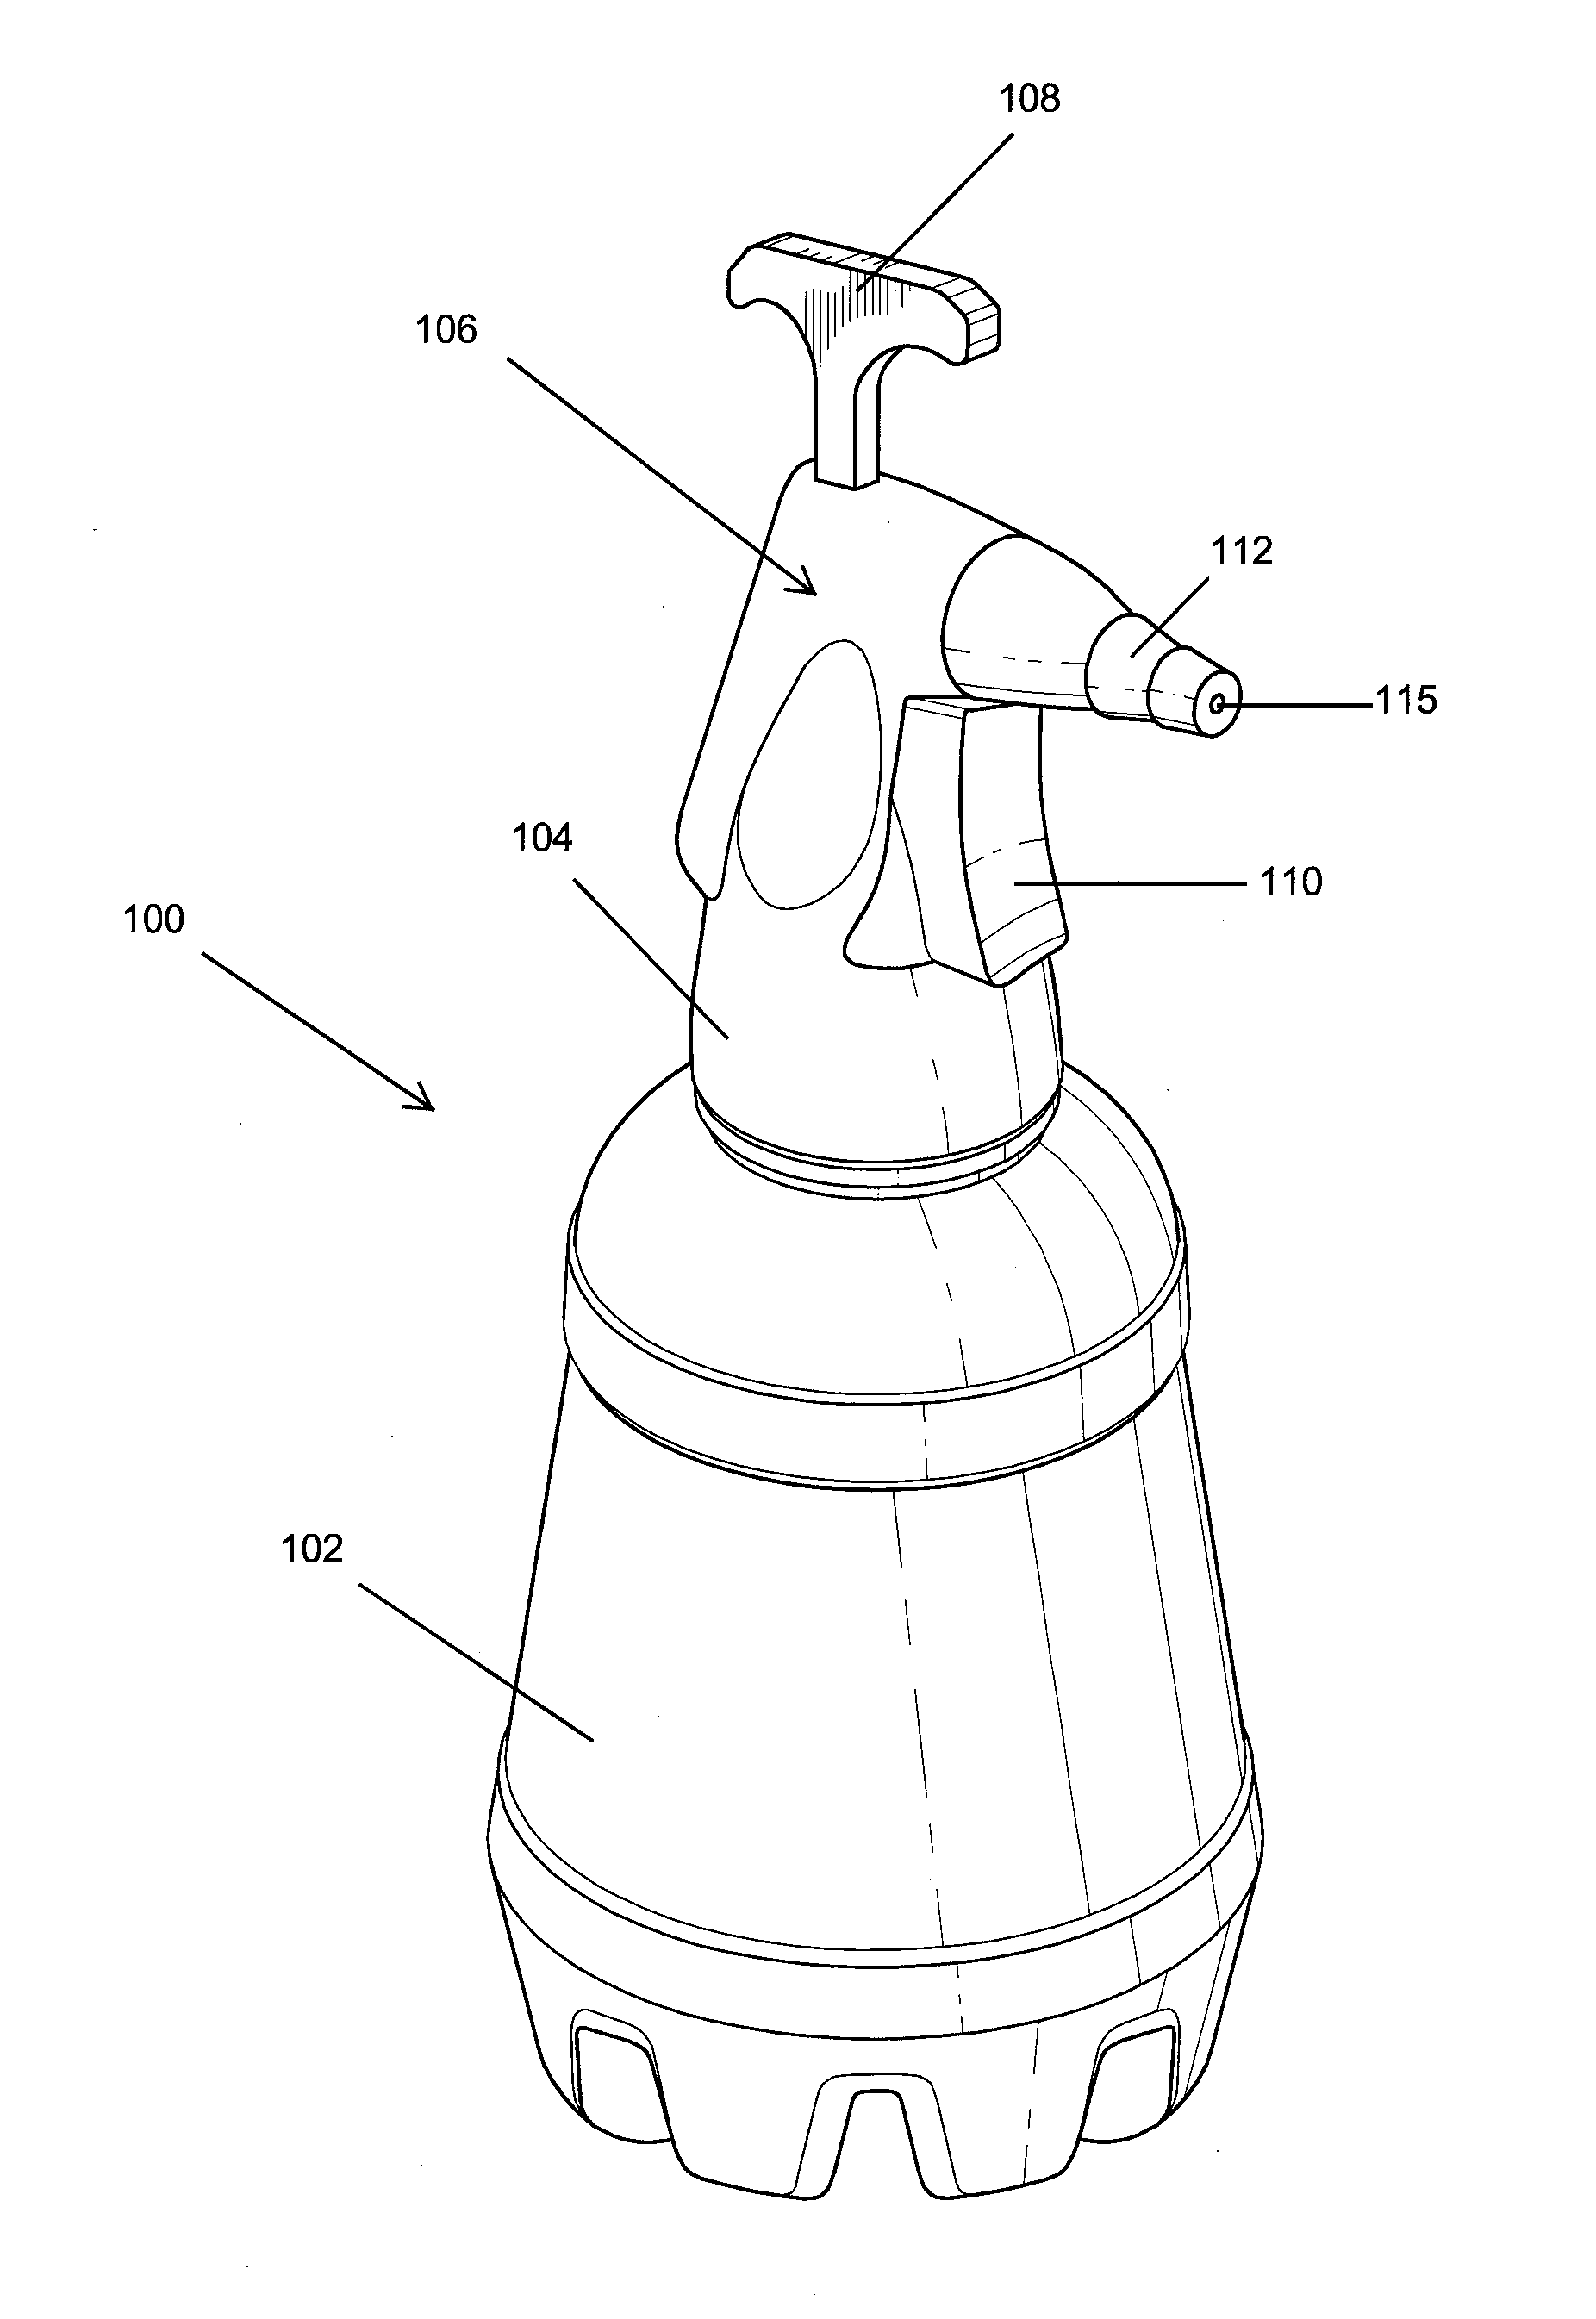 Balloon pumper having relief valve